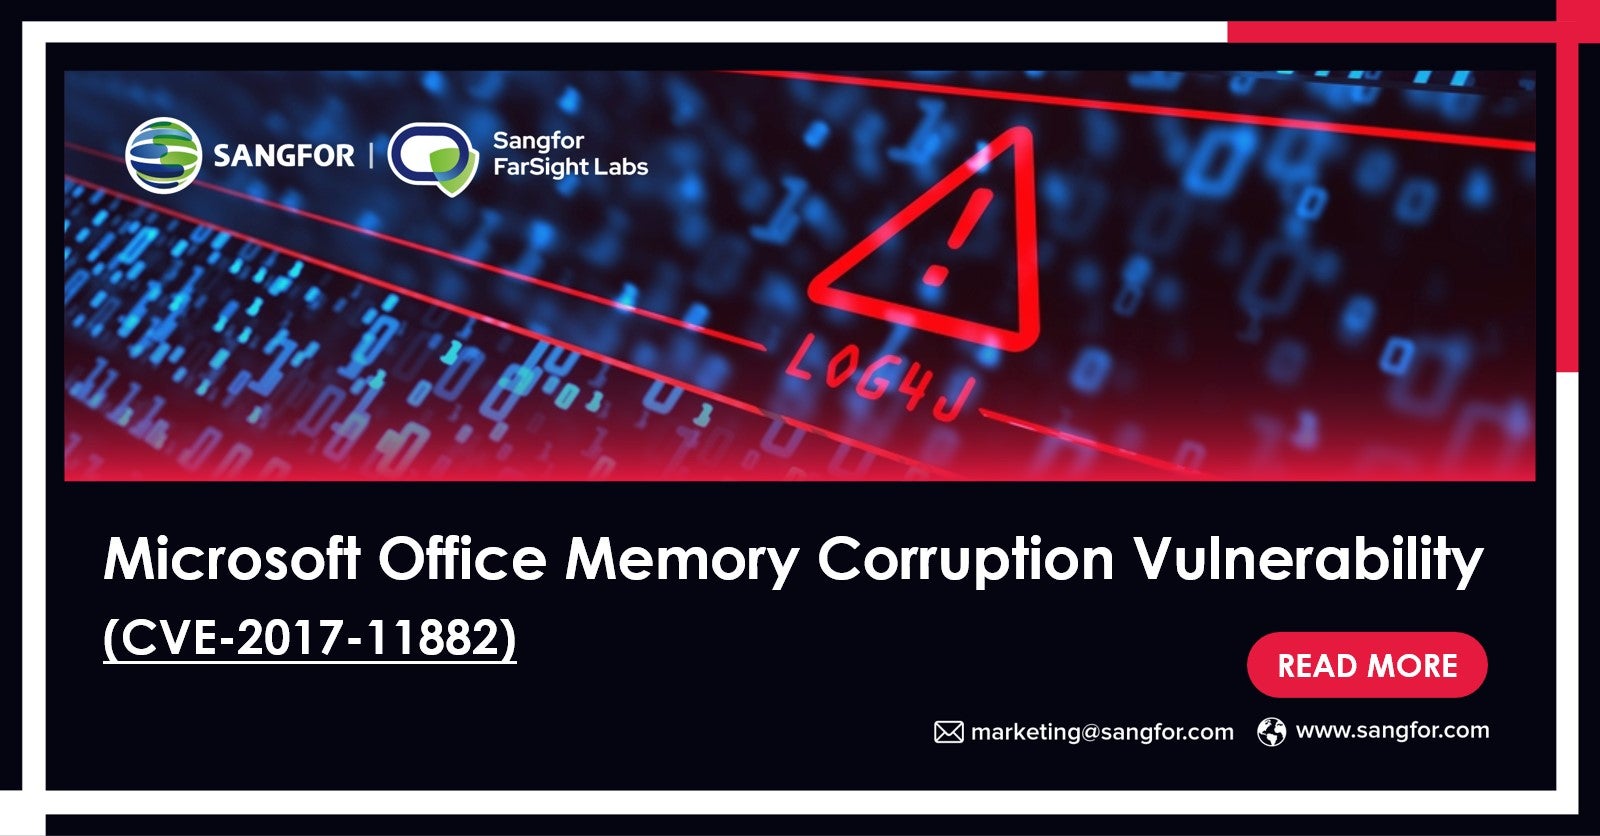 Microsoft Office Memory Corruption Vulnerability (CVE-2017-11882)